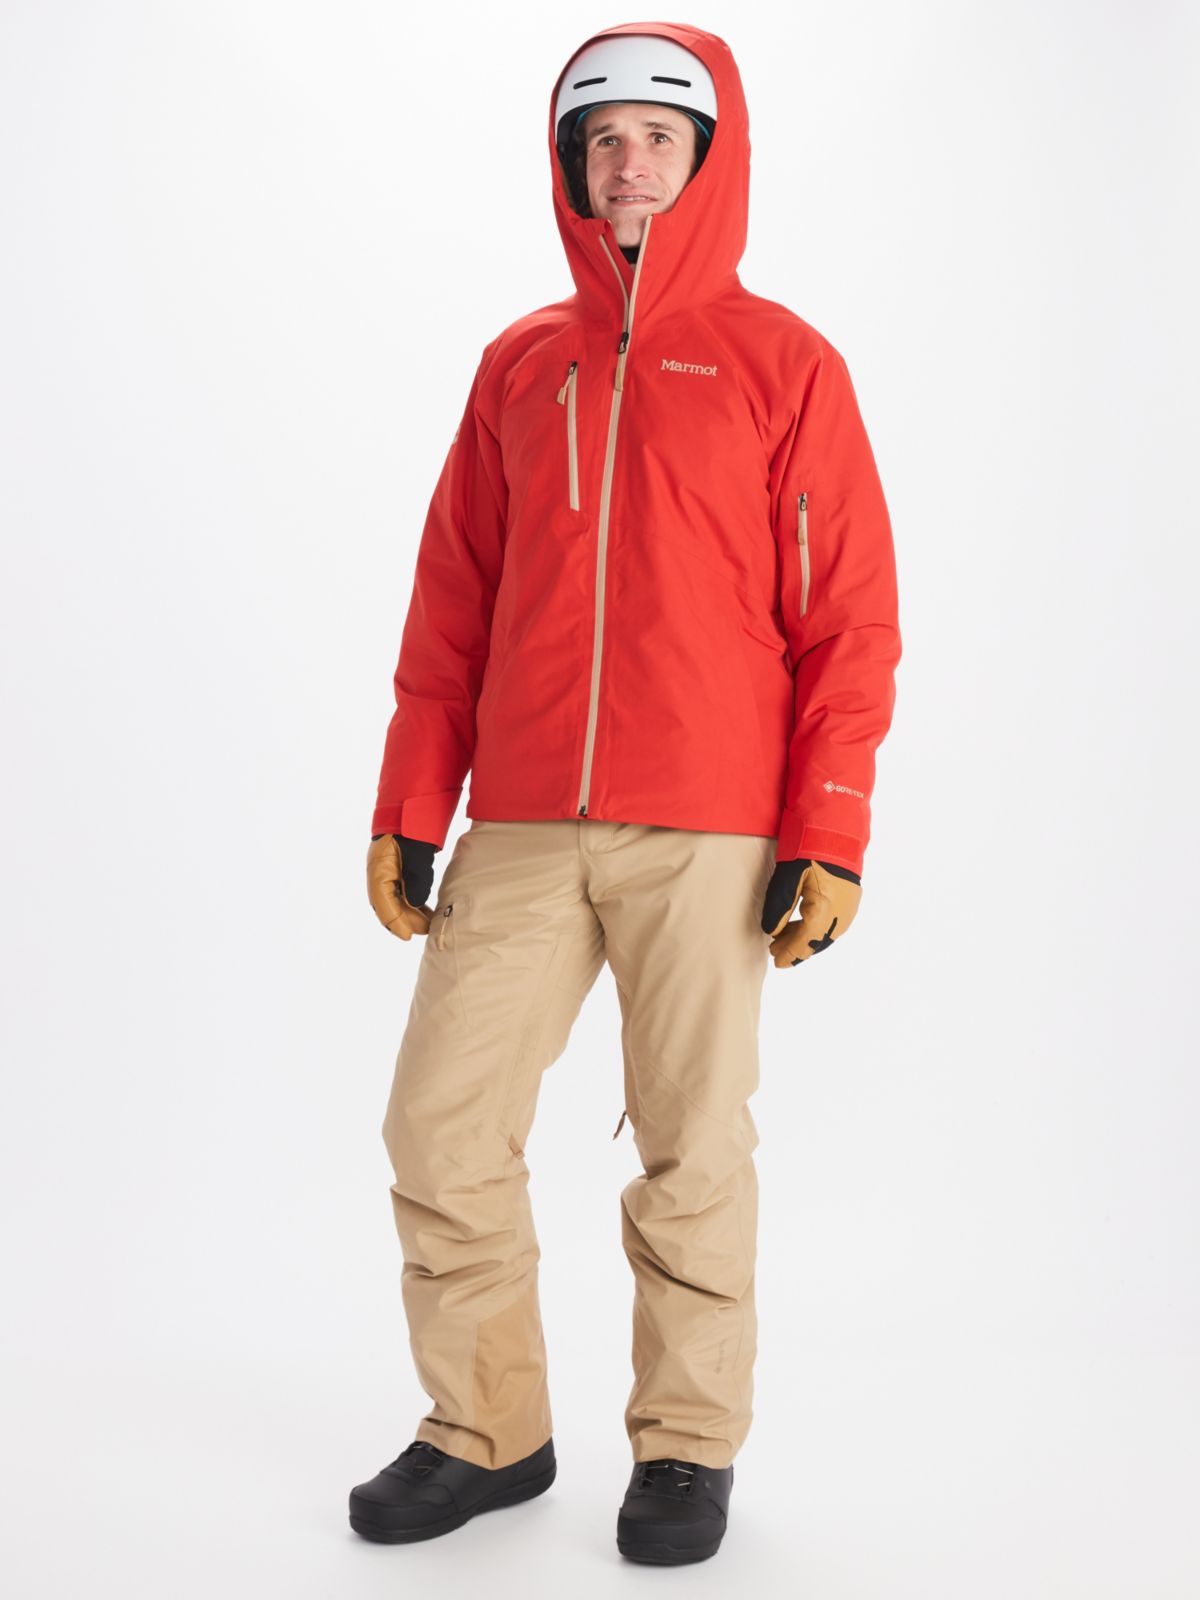 Man dressed for skiing wears Marmot red mens ski jacket